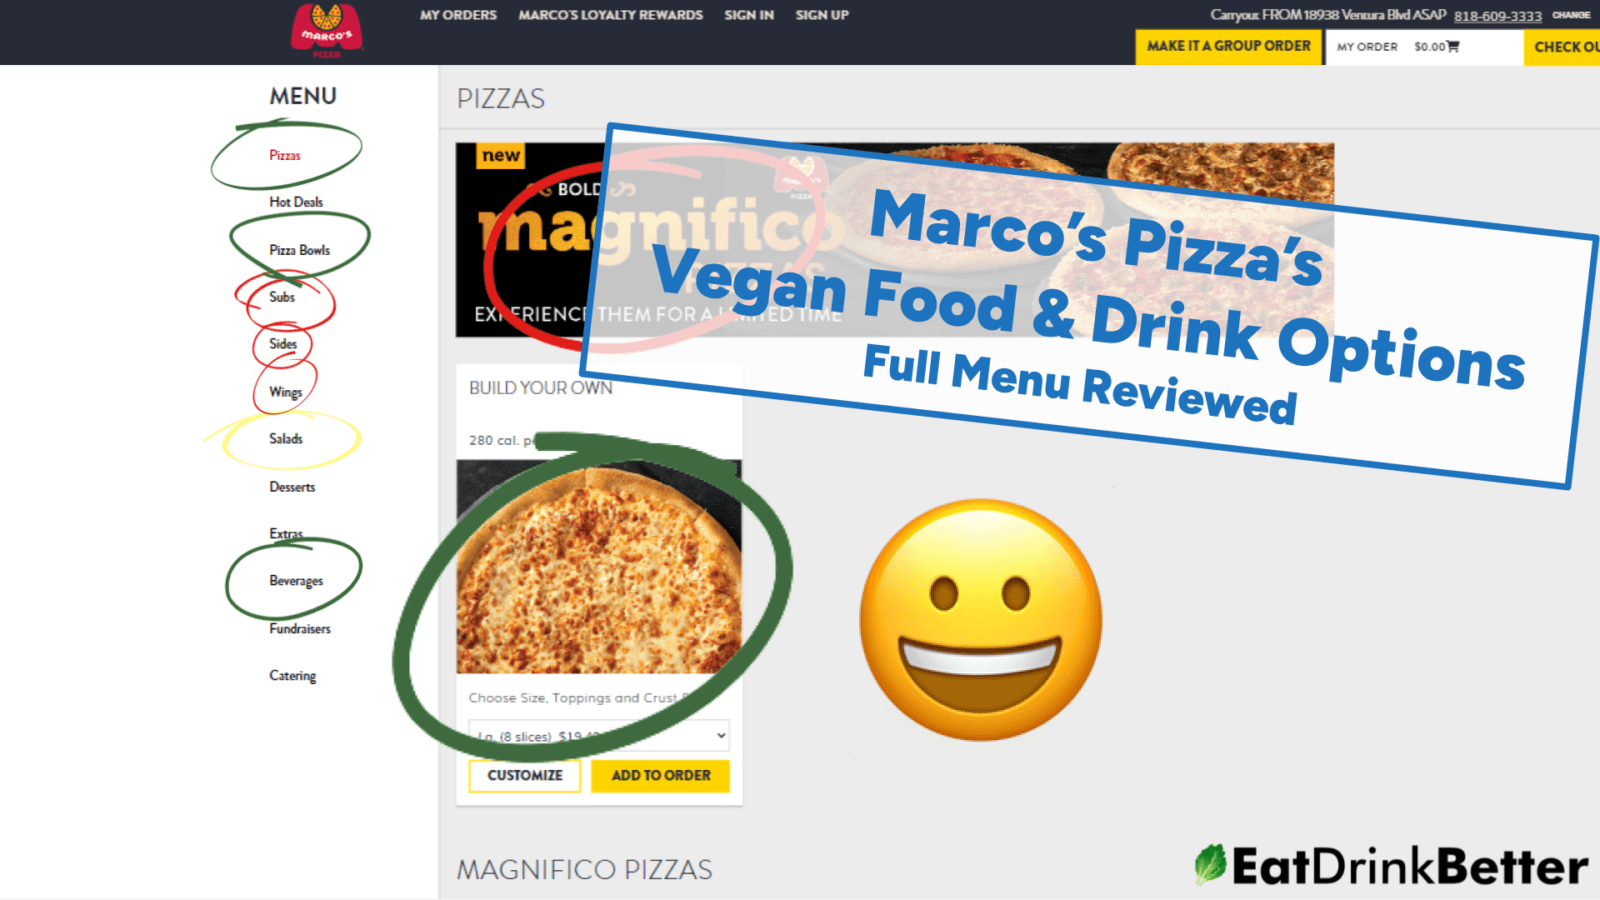 marcos pizza vegan options